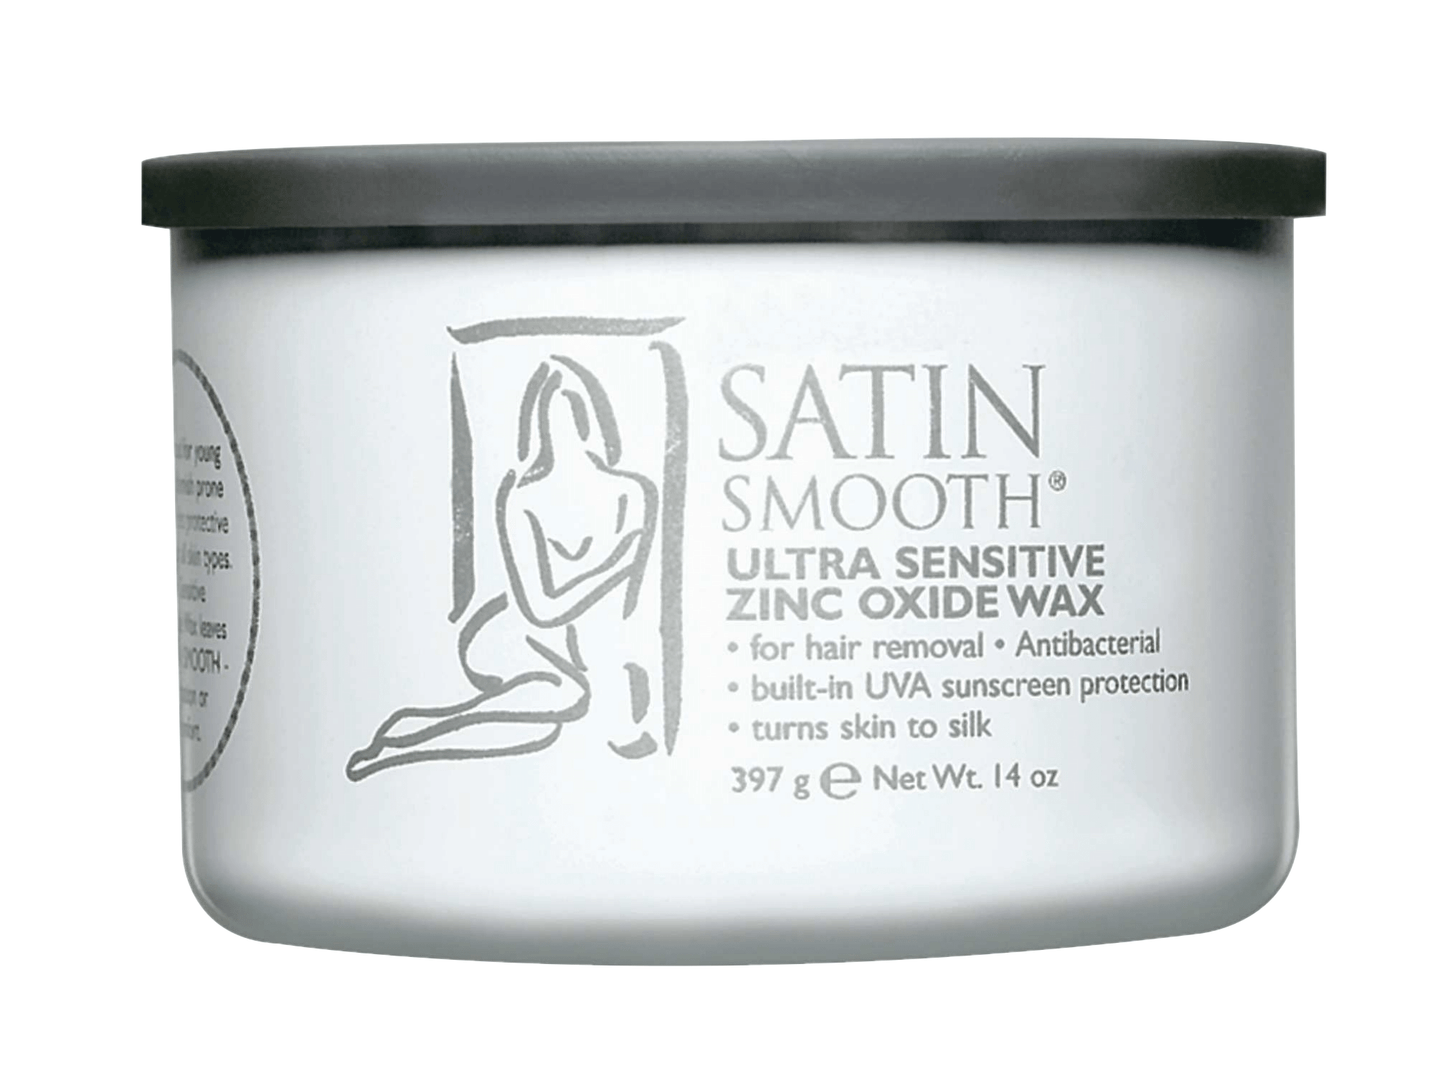 Satin Smooth Ultra Sensitive Zinc Oxide Wax